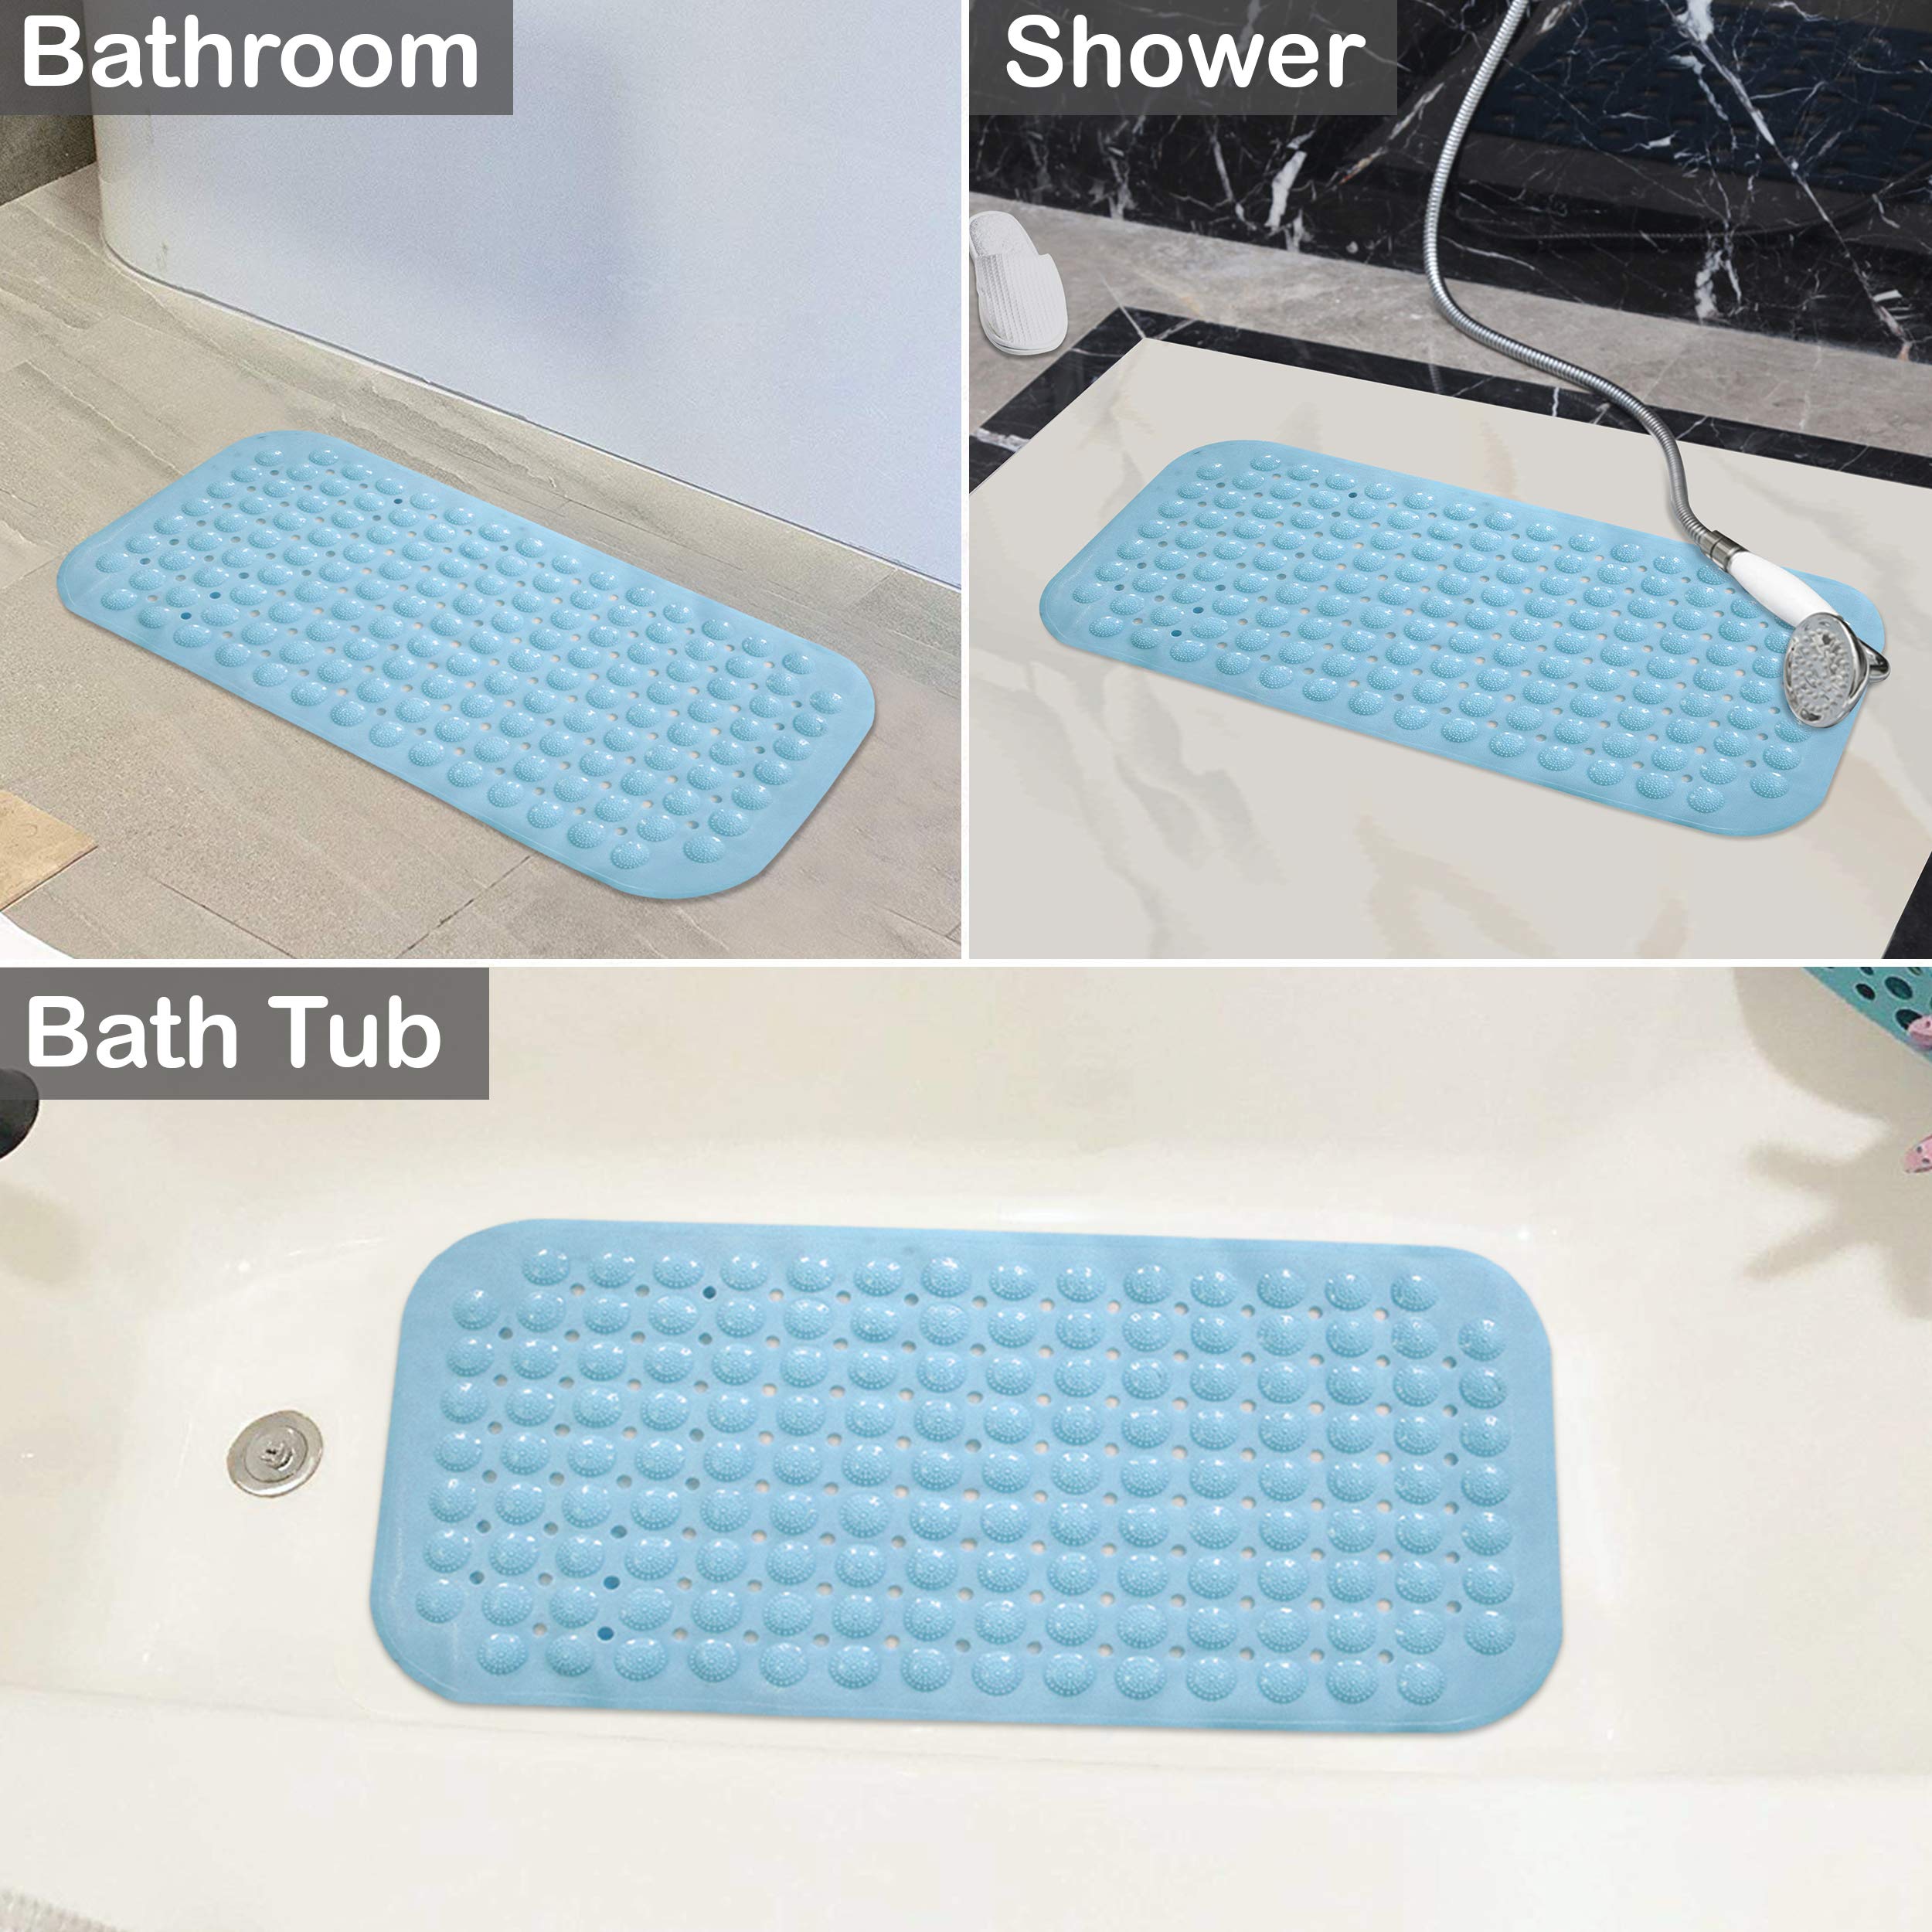 PVC Shower Mat Anti-Slip with Massage Acupressure Points, 36x71 cm, Blue